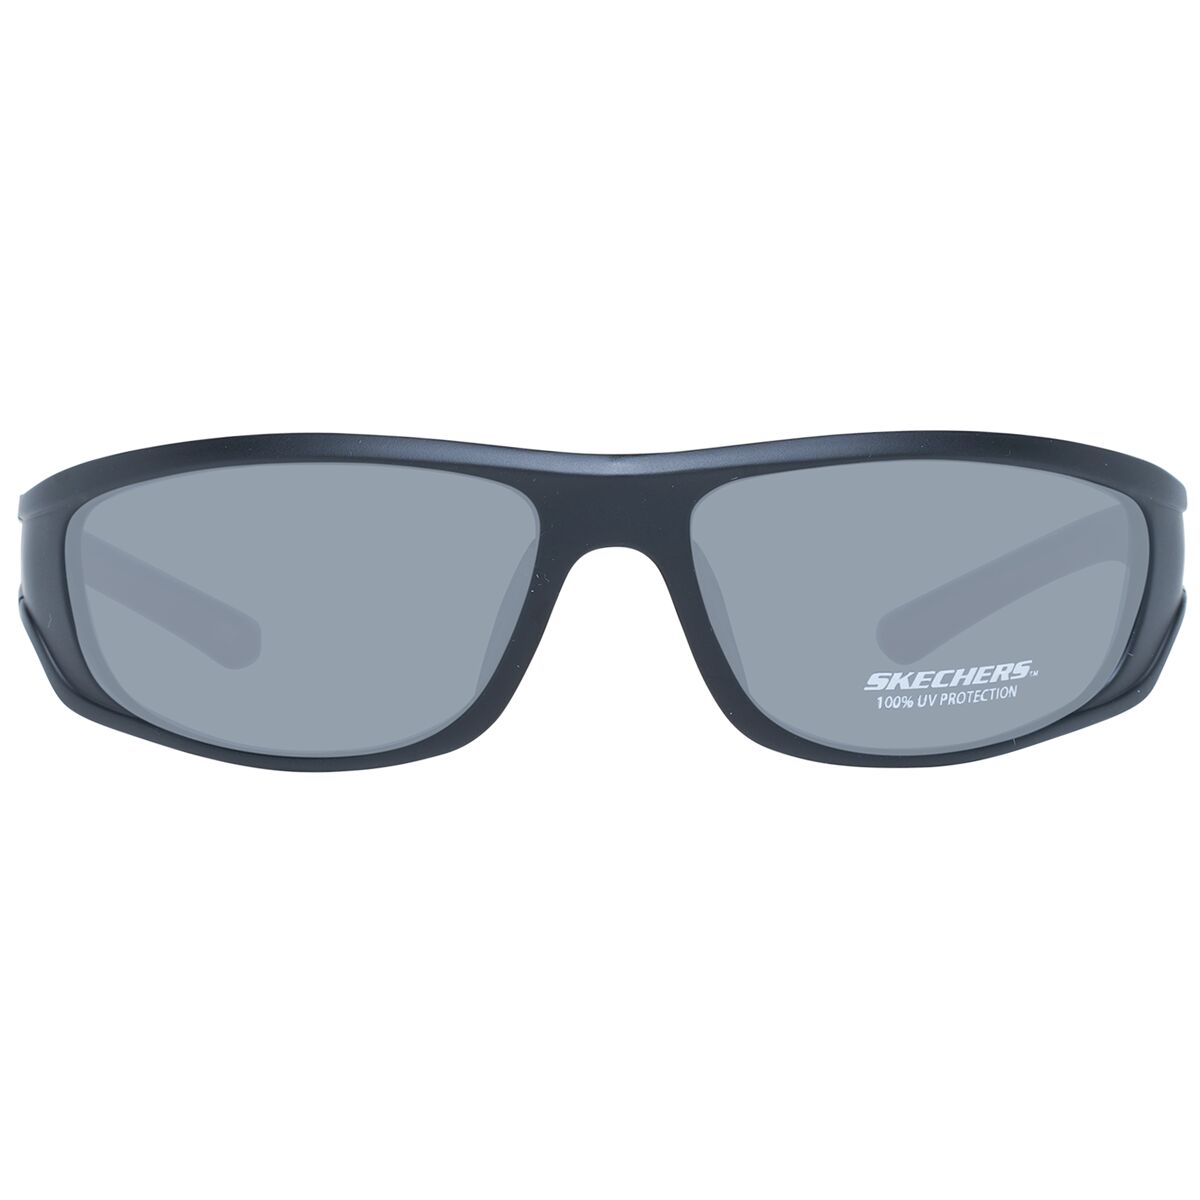 Kaufe Herrensonnenbrille Skechers SE9068 6102A bei AWK Flagship um € 58.00